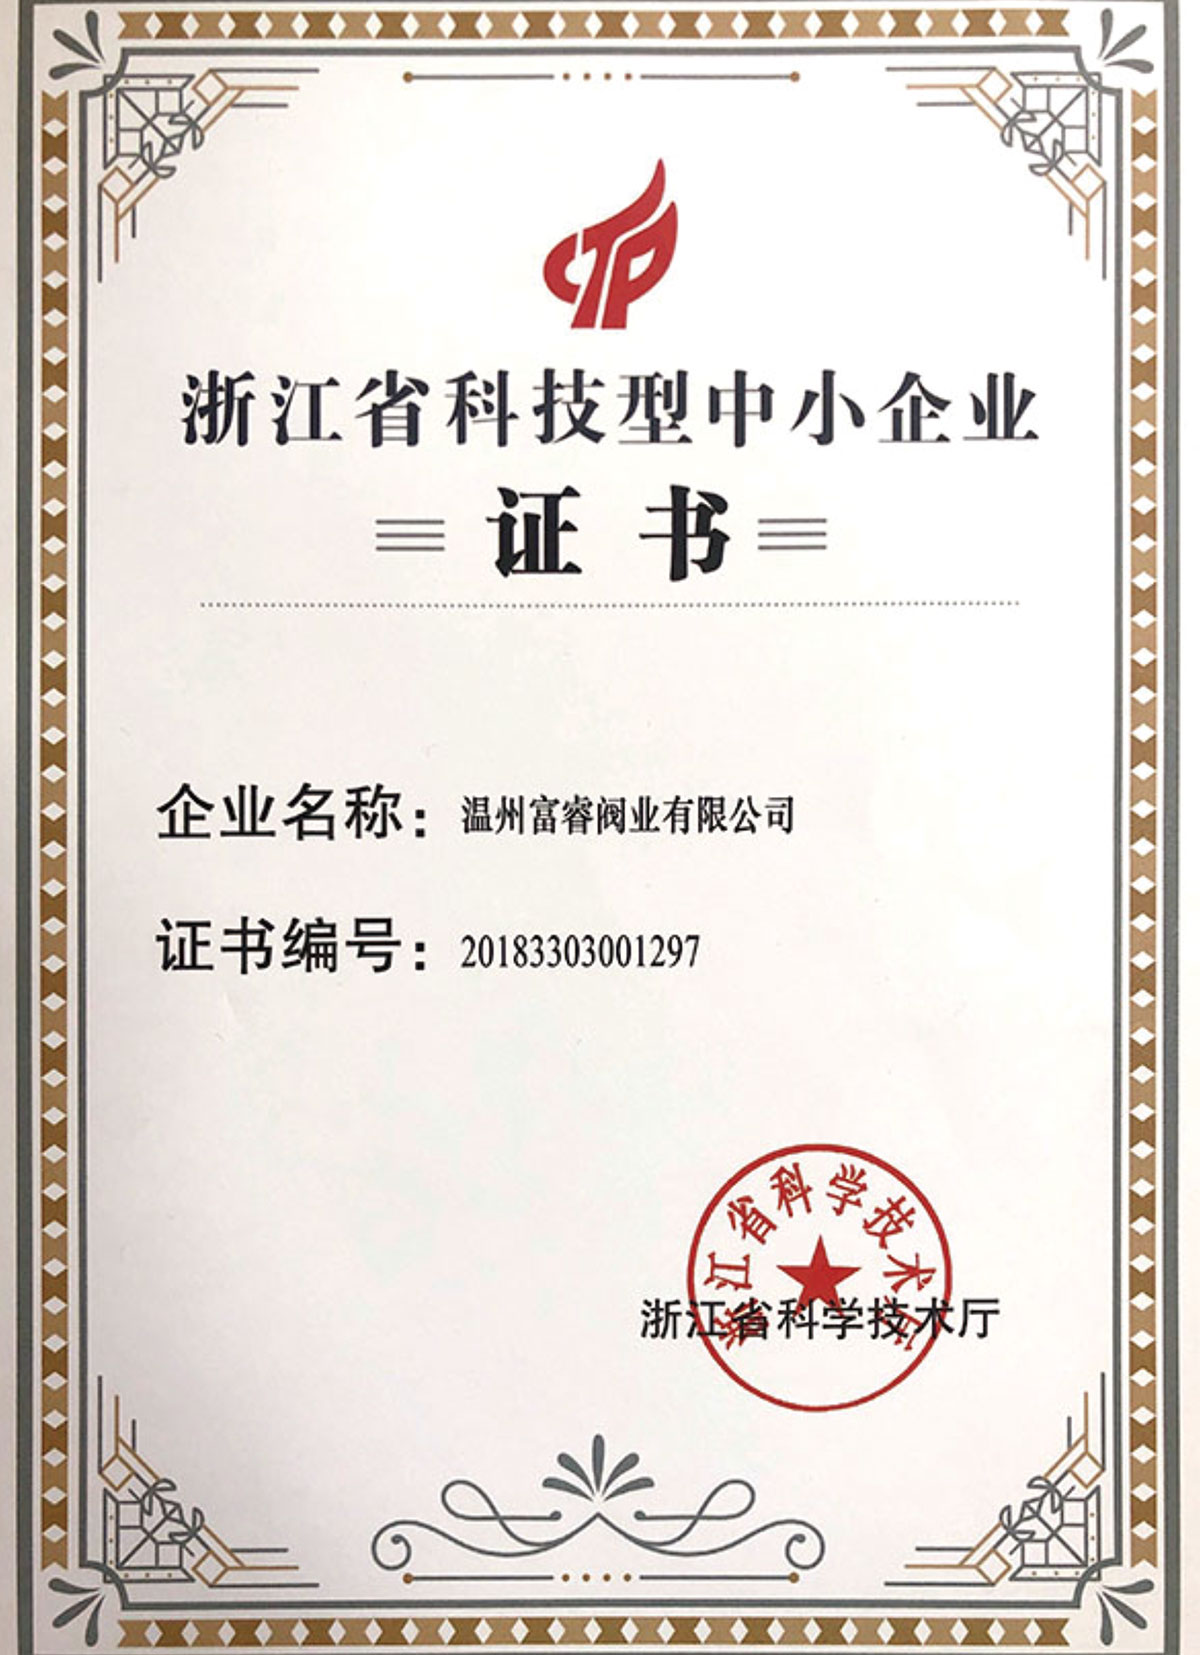 Certificate of Sci-Tech Enterprises